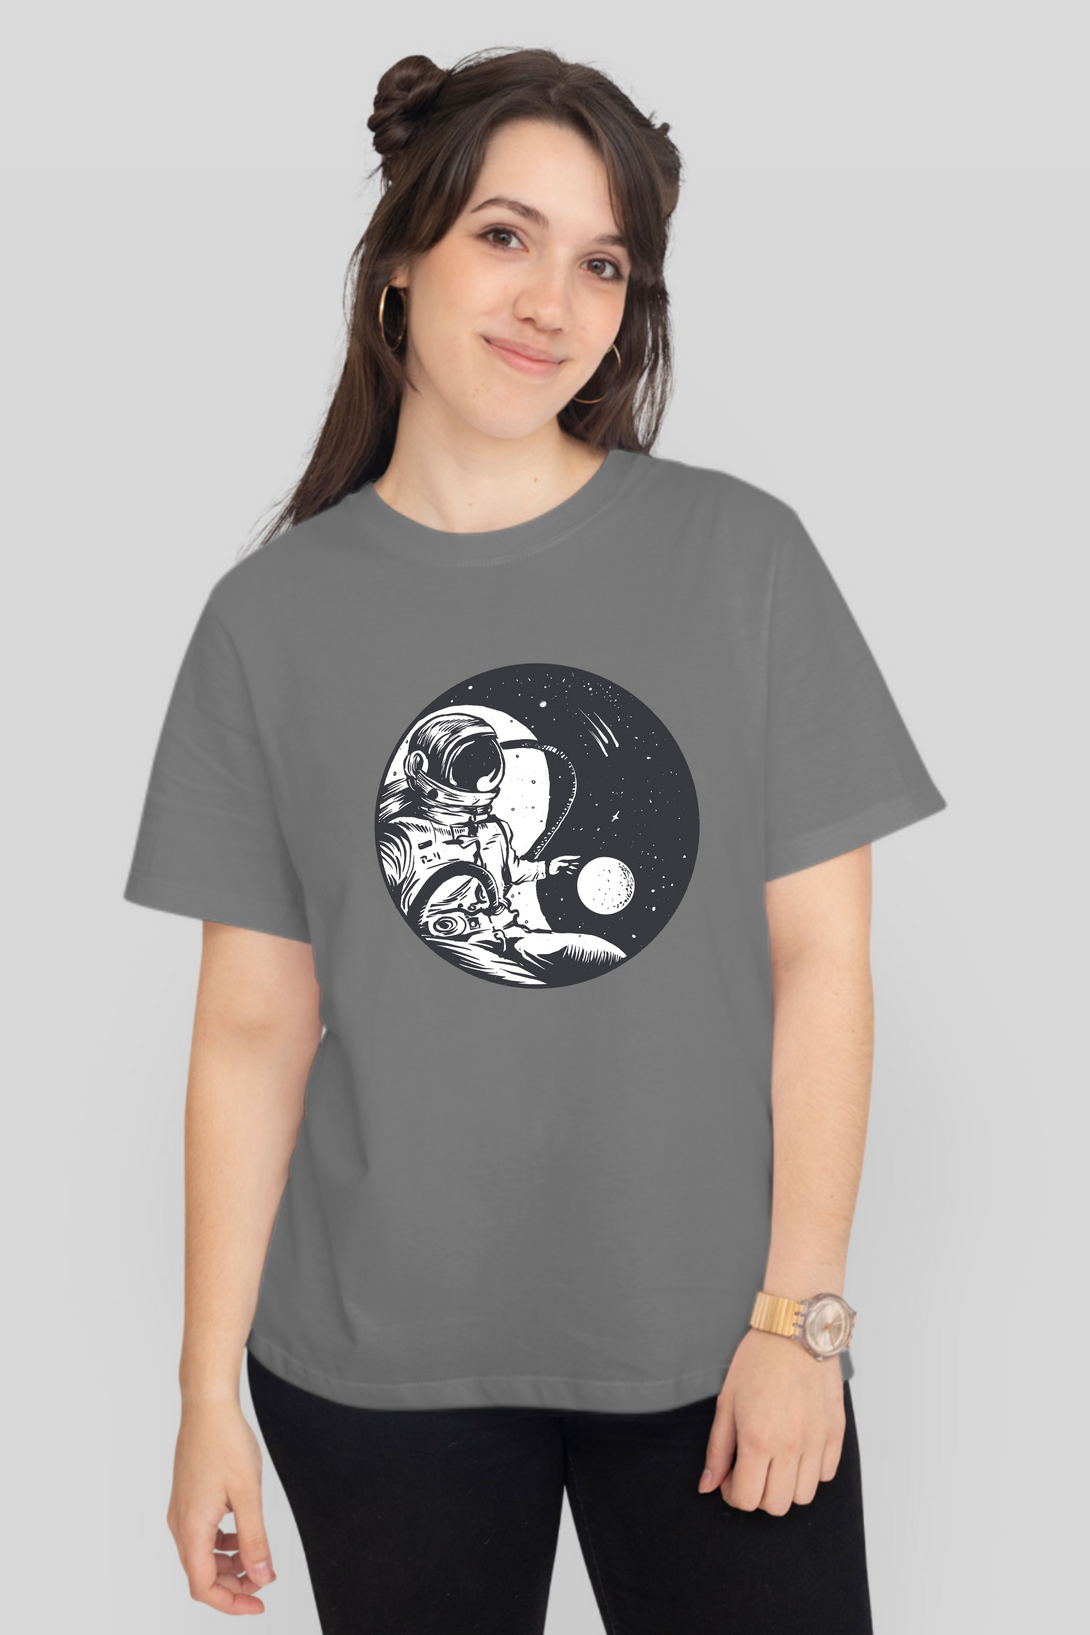 Cosmic Balance Printed T-Shirt For Women - WowWaves - 8